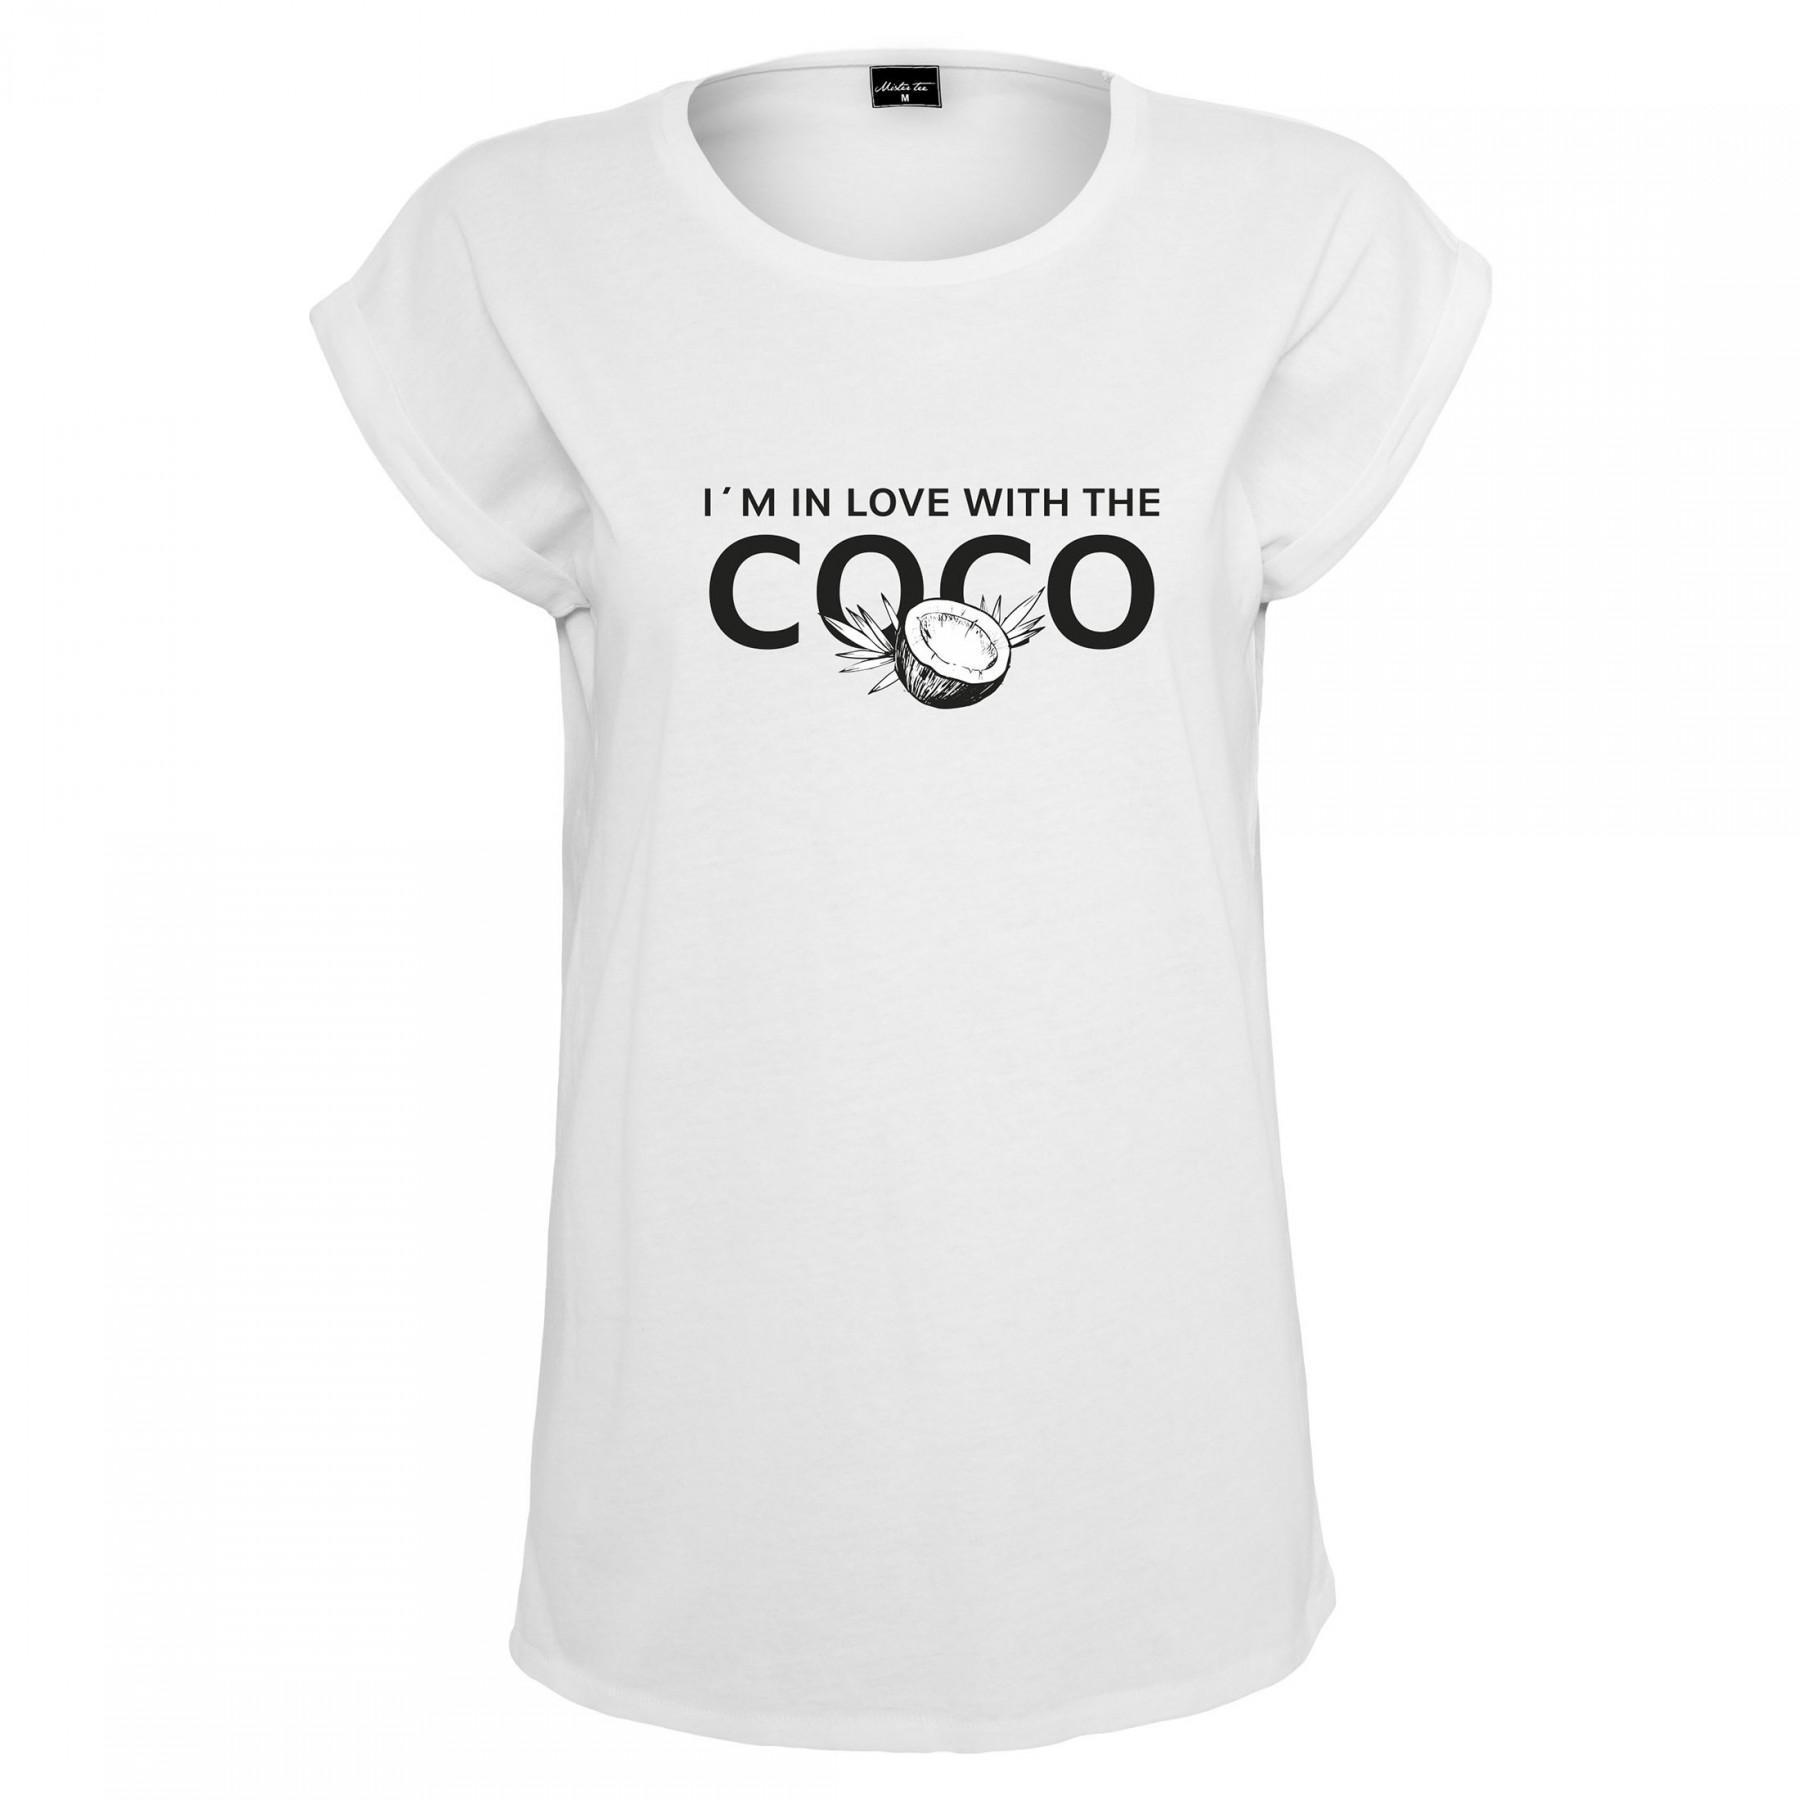 Women's T-shirt Mister Tee coco